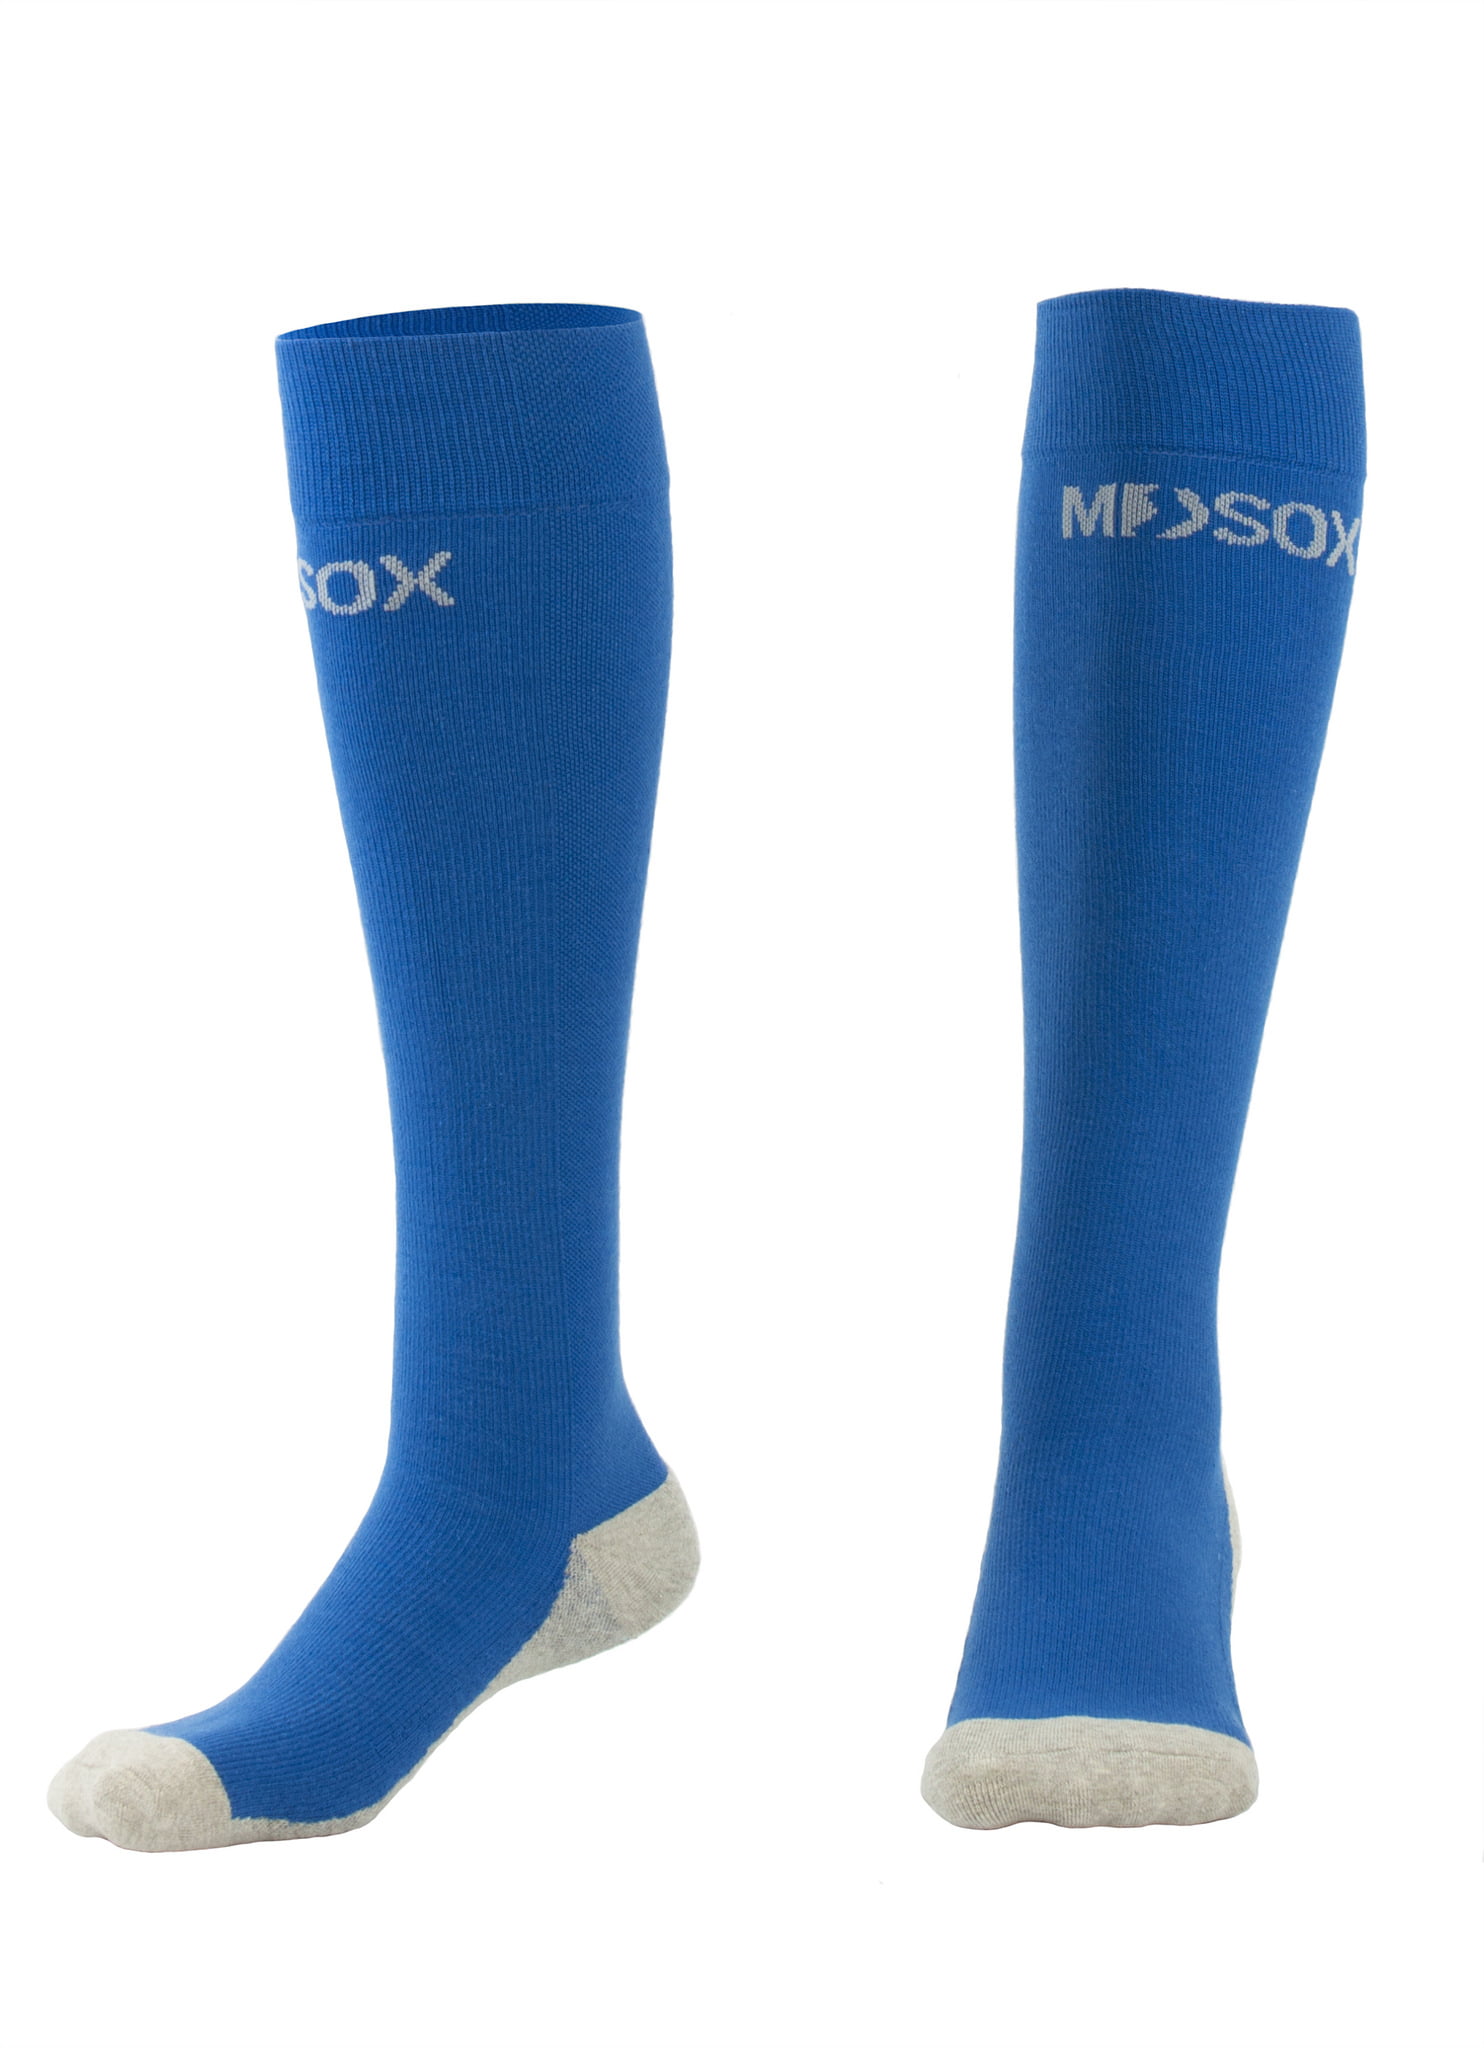 Graduated Compression Socks for Men & Women | MDSOX 20-30 mmHg ...